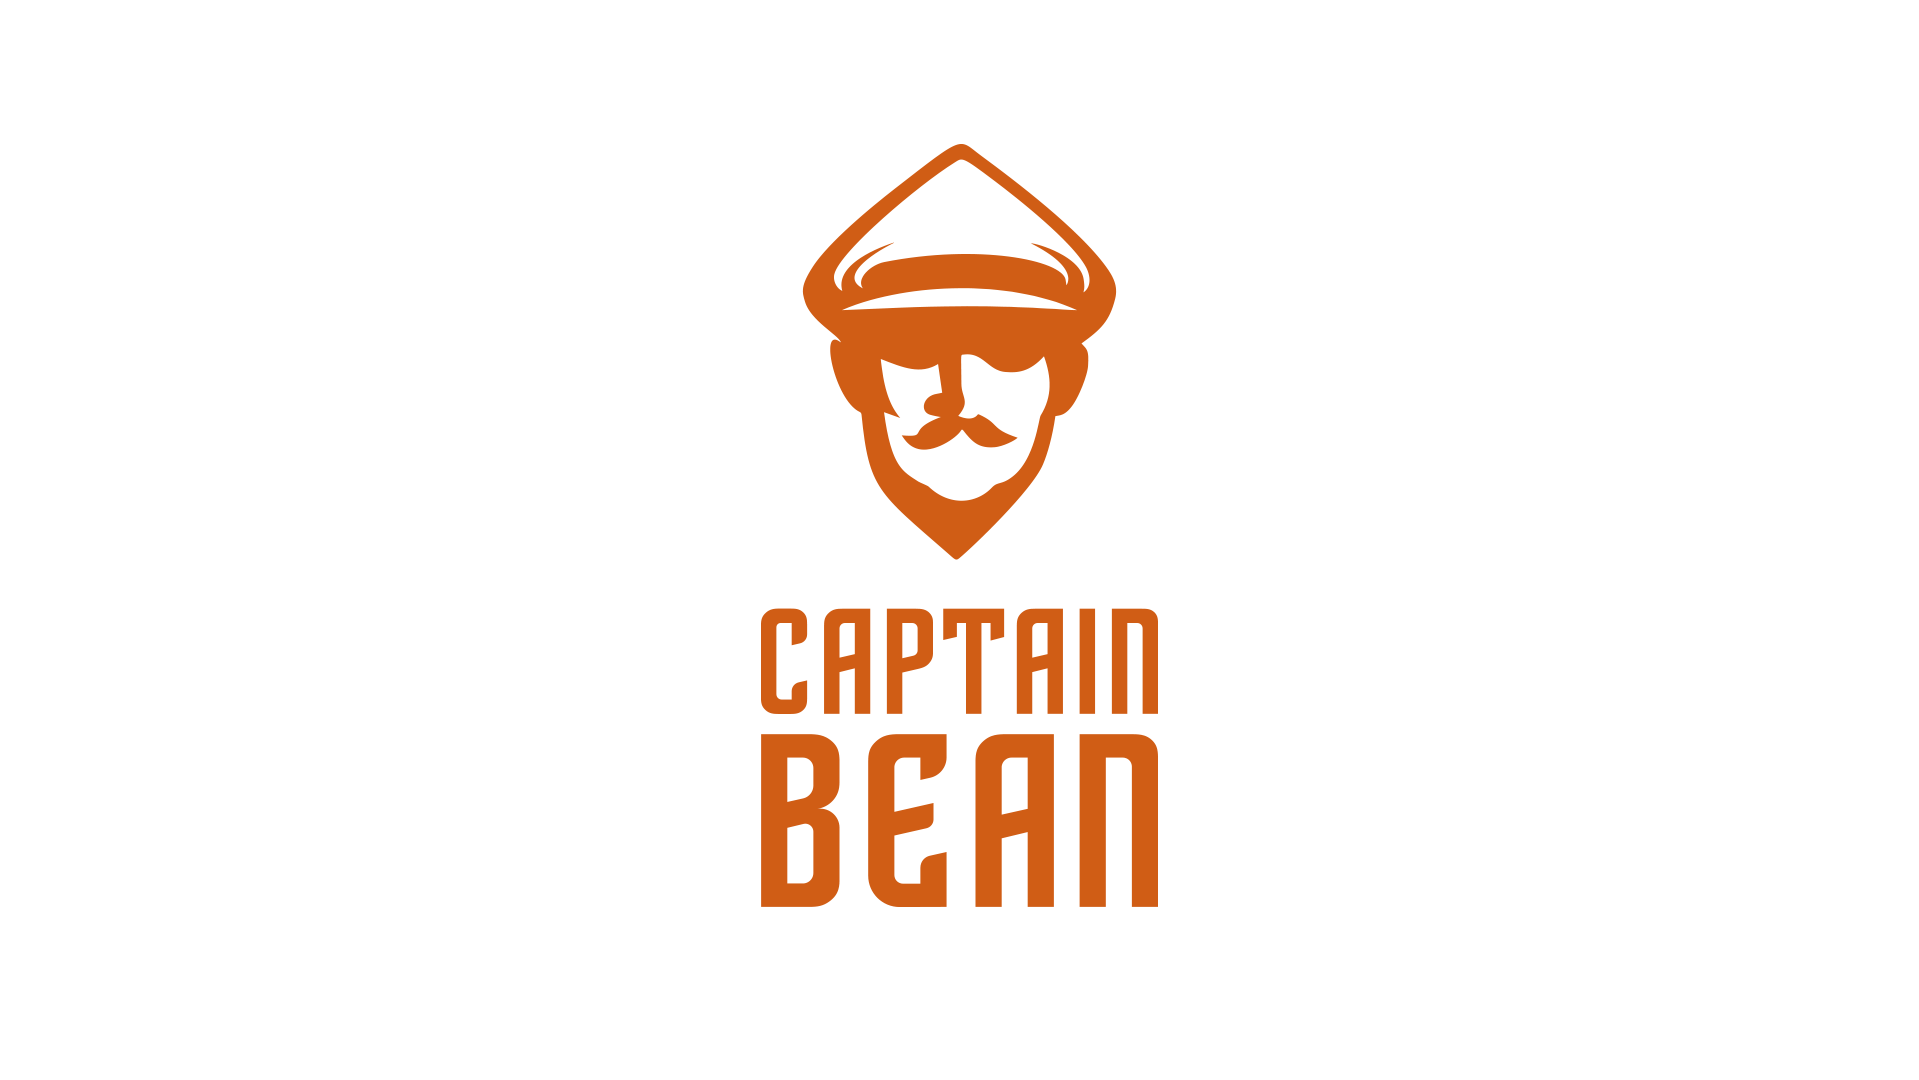 Captain Bean